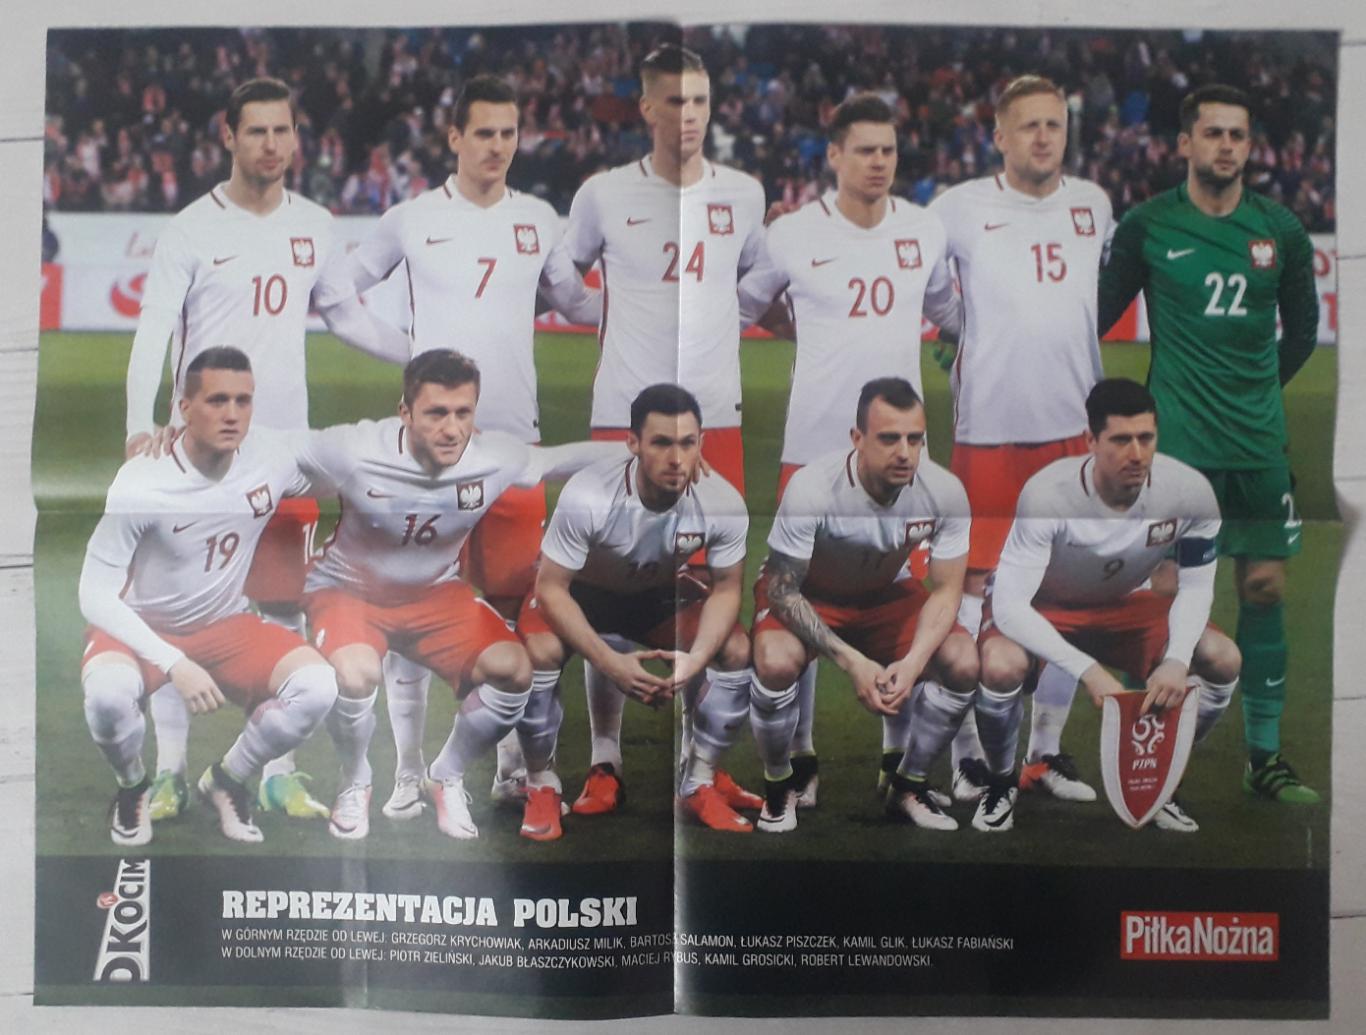 Журнал Pilka Nozna. Євро 2016 2